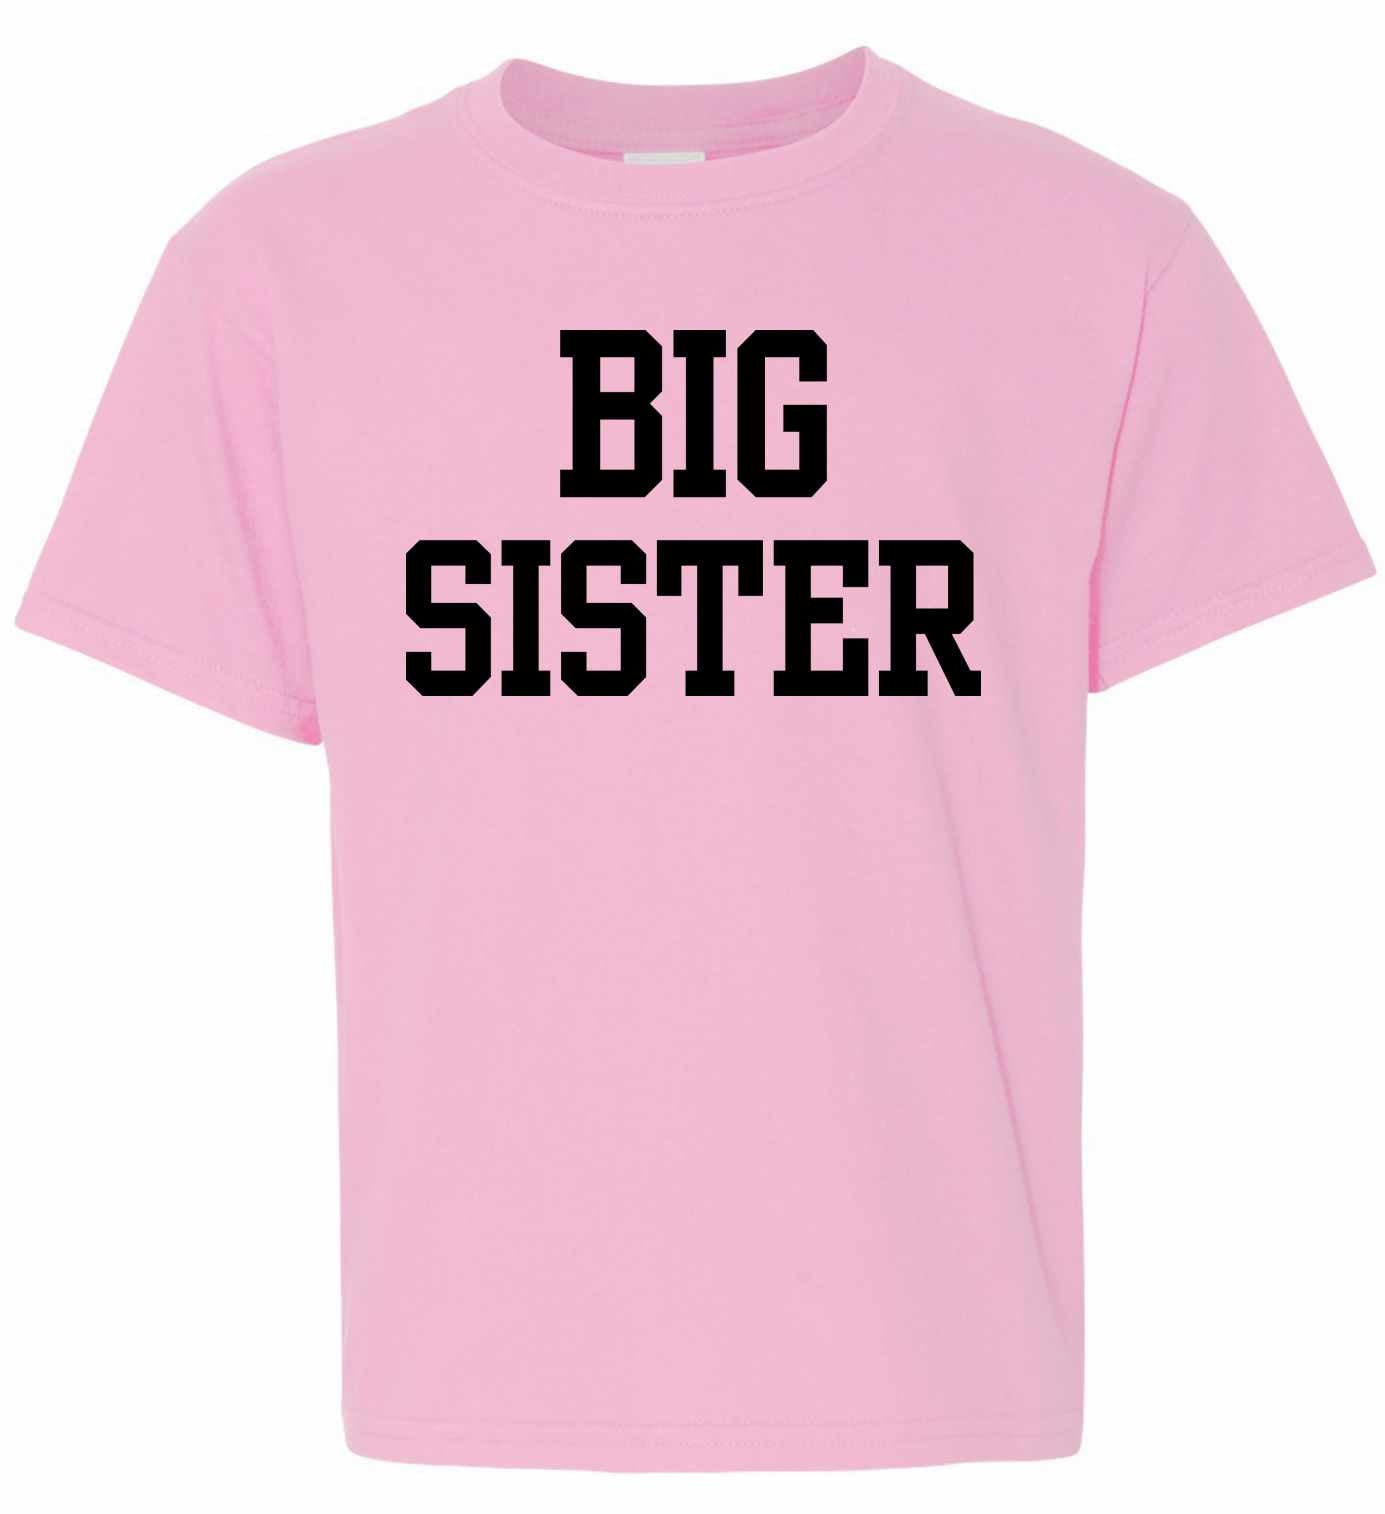 BIG SISTER on Youth T-Shirt (#1143-201)